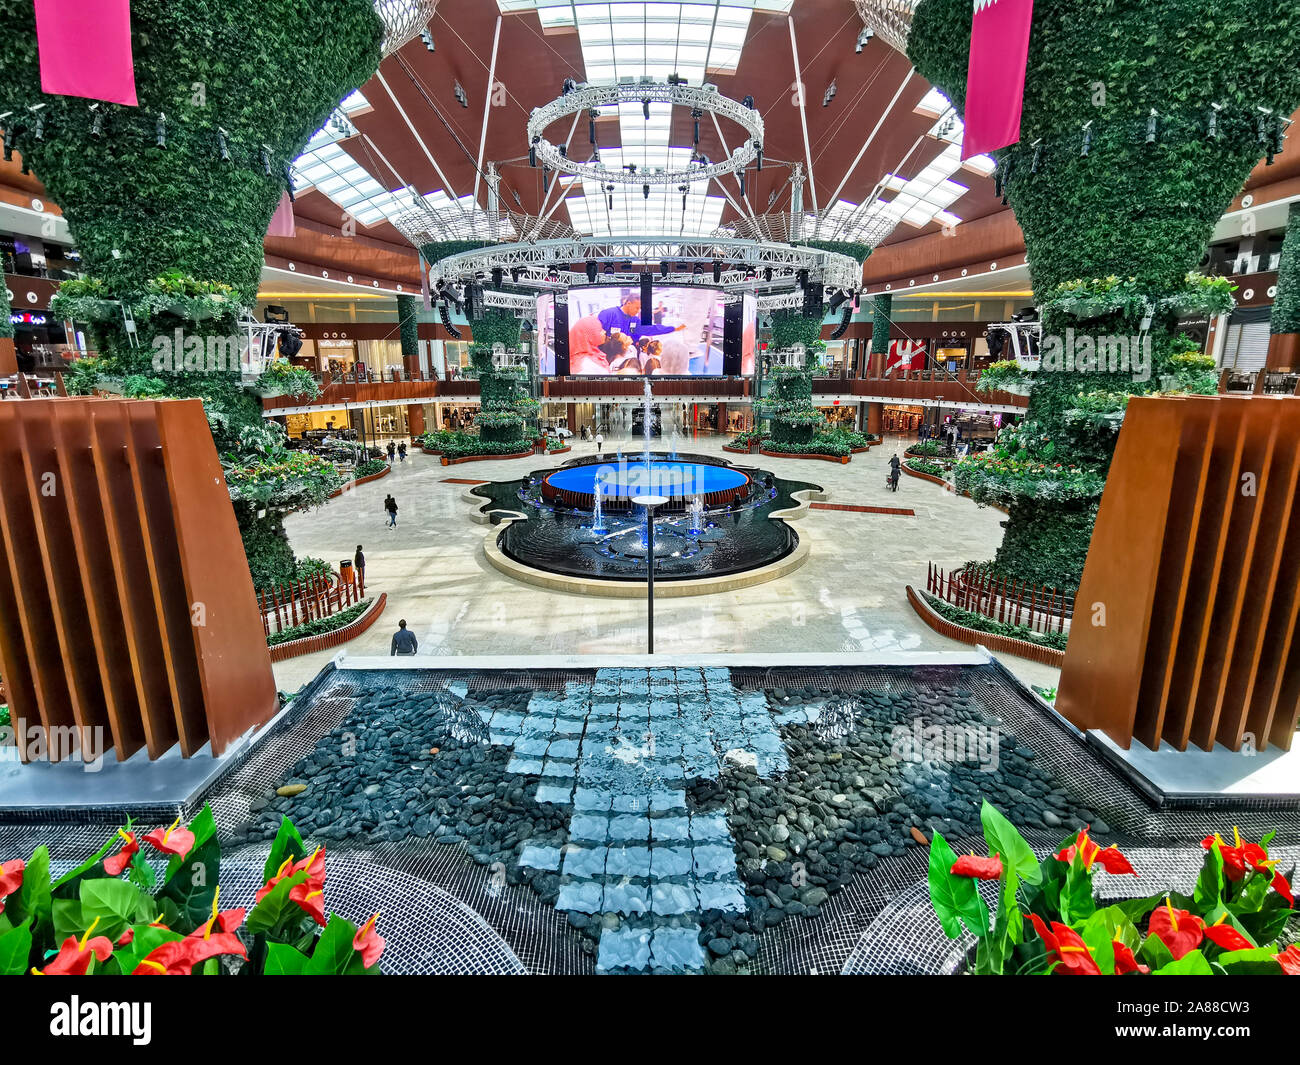 October 13 2019-Mall of Qatar,Doha,Qatar: Beautiful mall in Qatar,The Mall of Qatar with i love Qatar signage Stock Photo